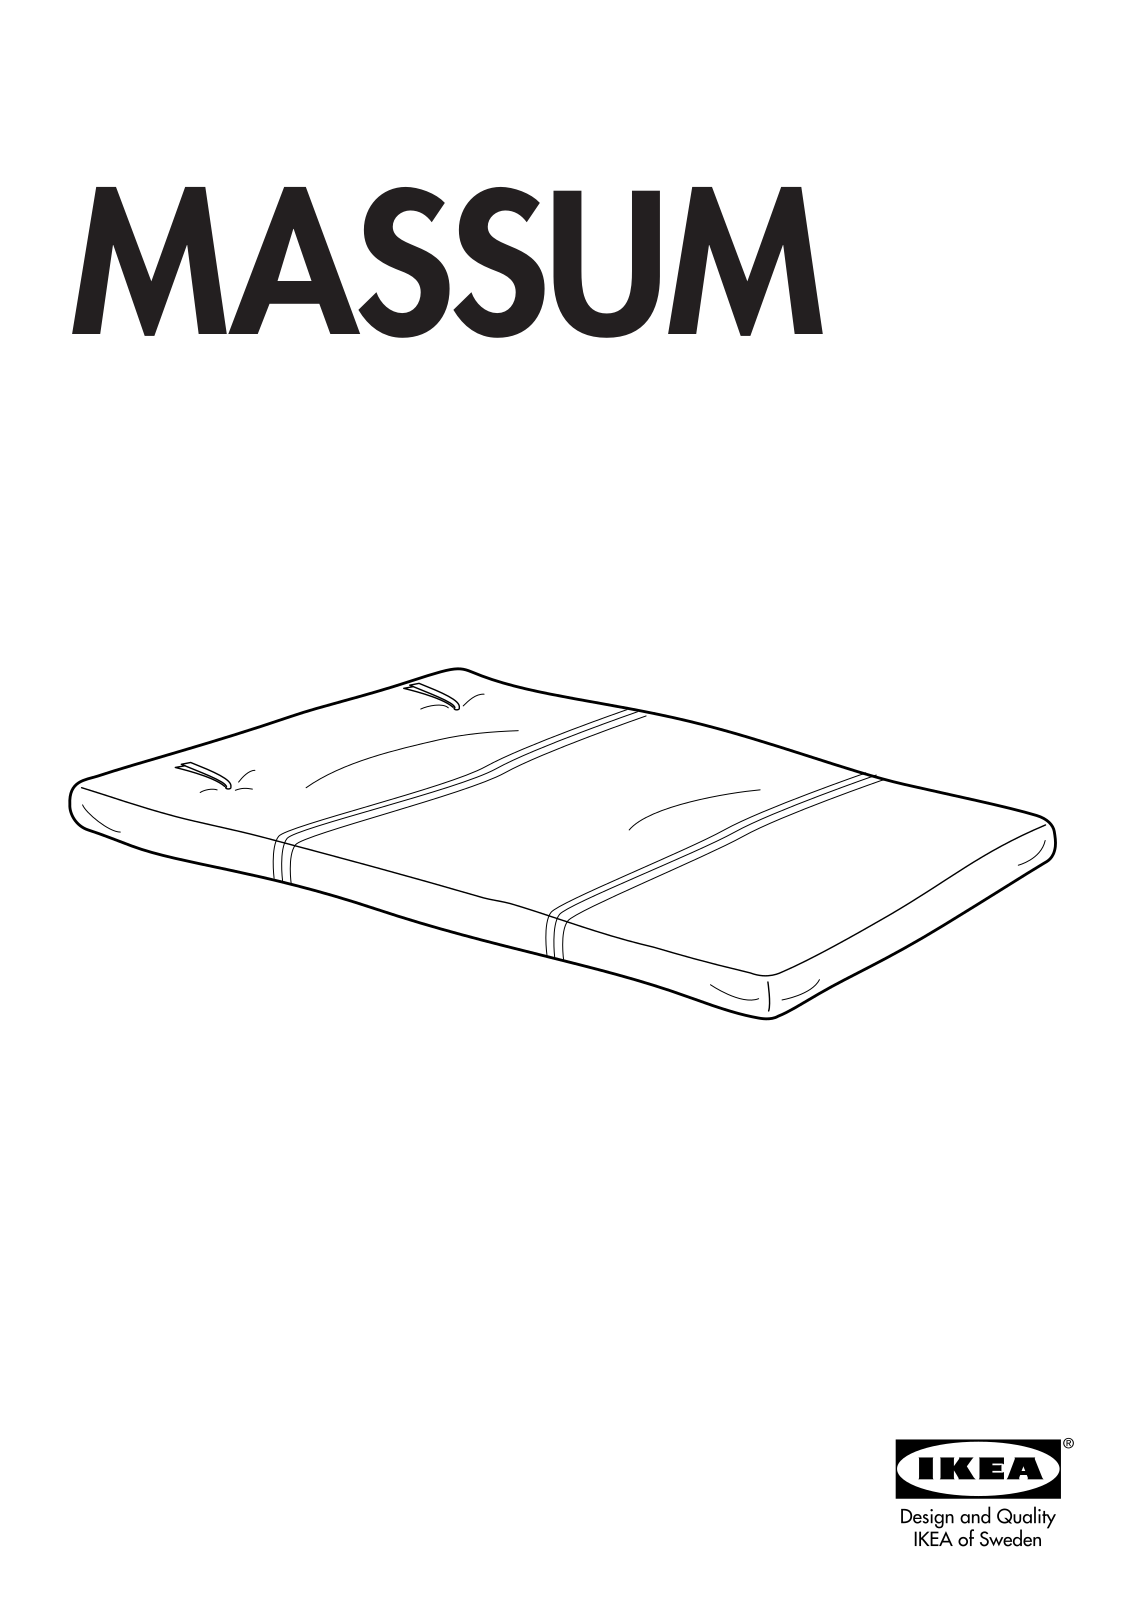 IKEA MASSUM FUTON SOFA MATTRESS 55X79 Assembly Instruction